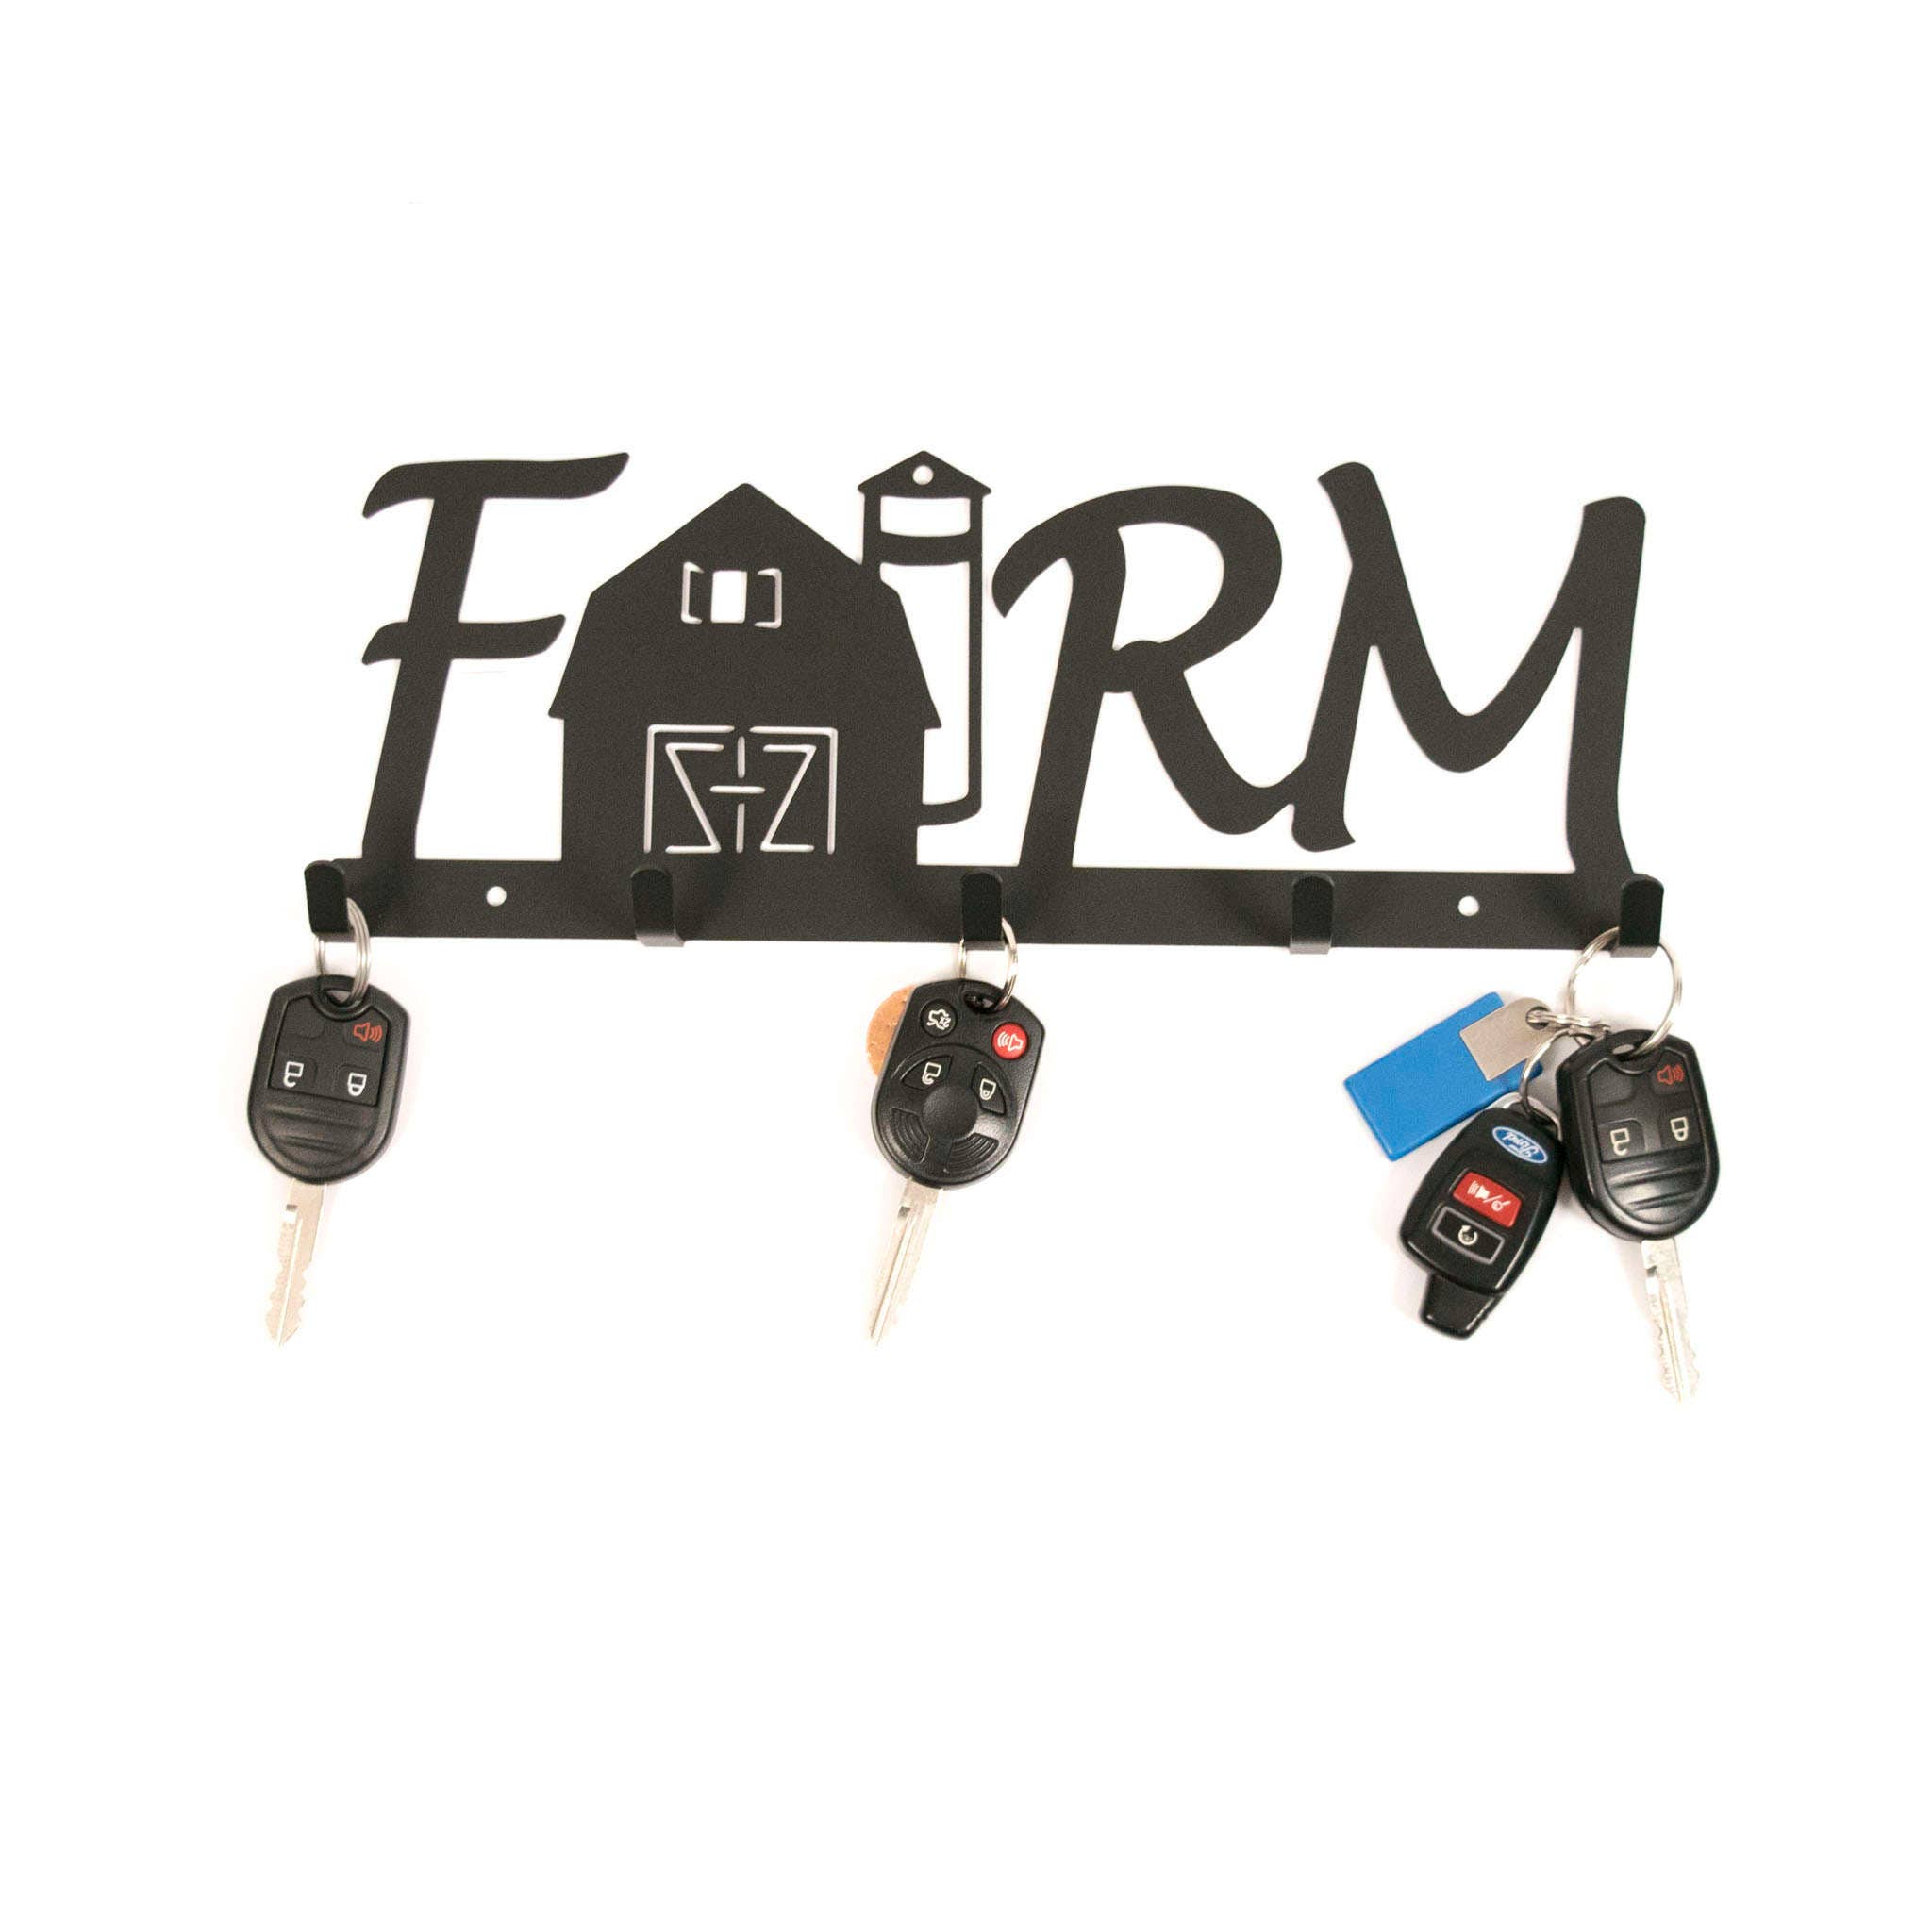 farmhouse key holder